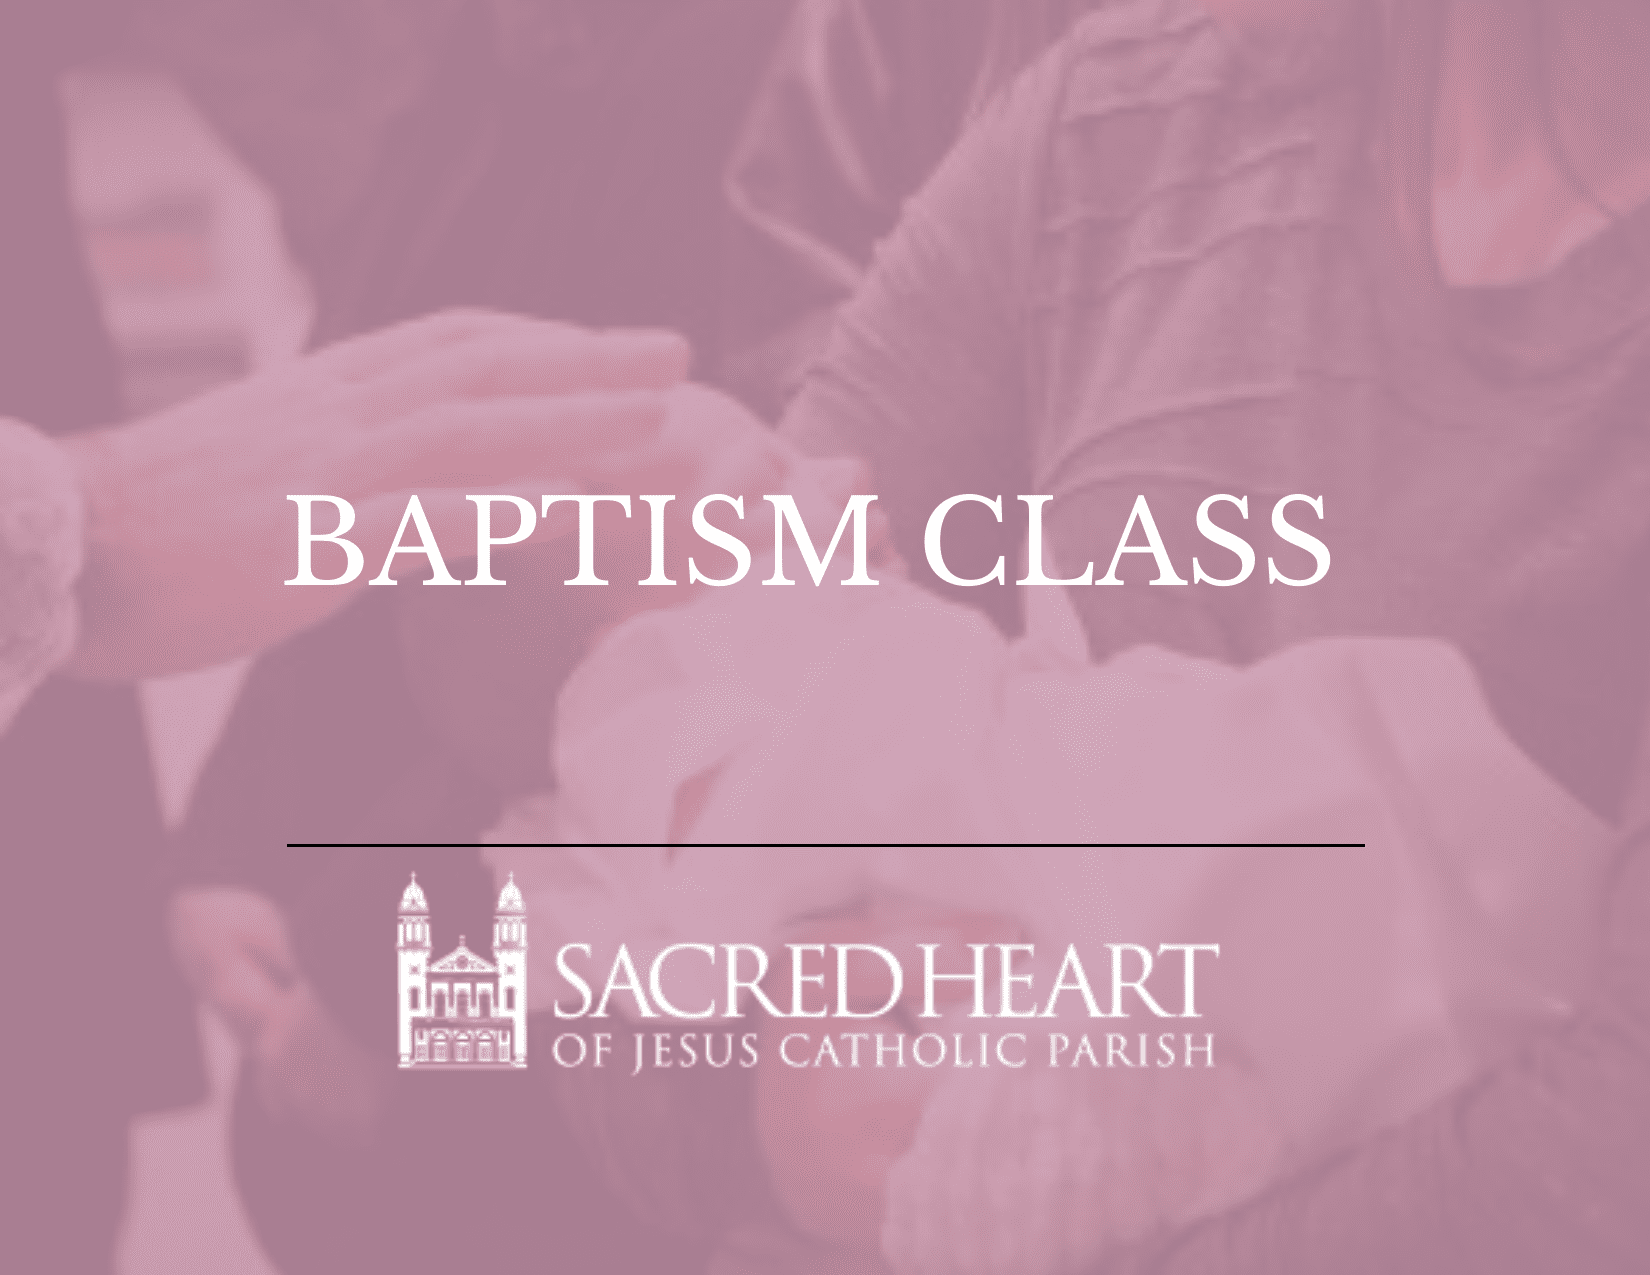 Baptism Class – Thursday, January 20